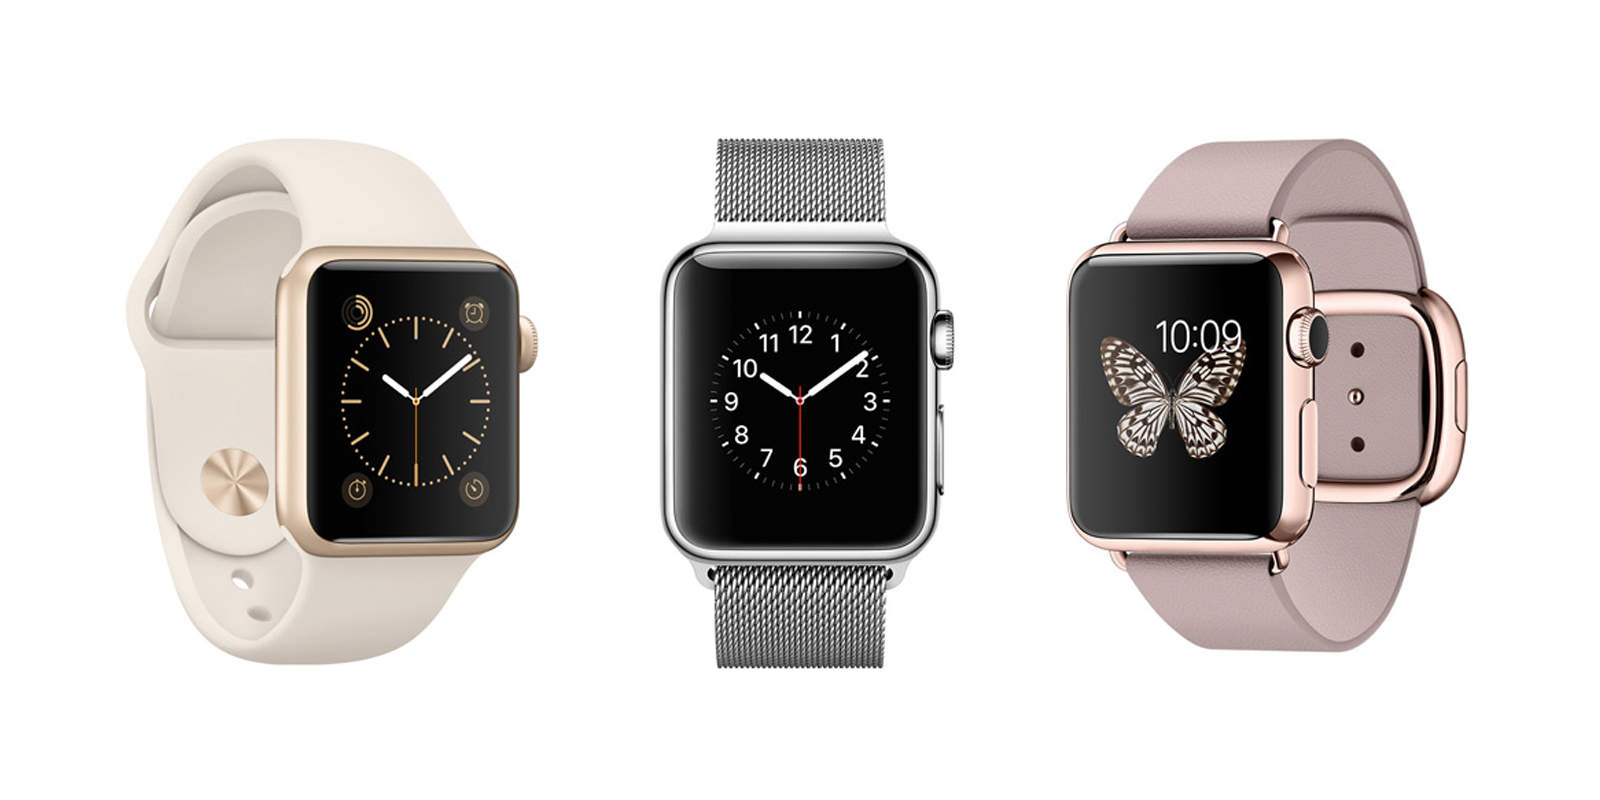 Apple-Watch-models watchos 2.2 ios 9.3 smartwatch hack